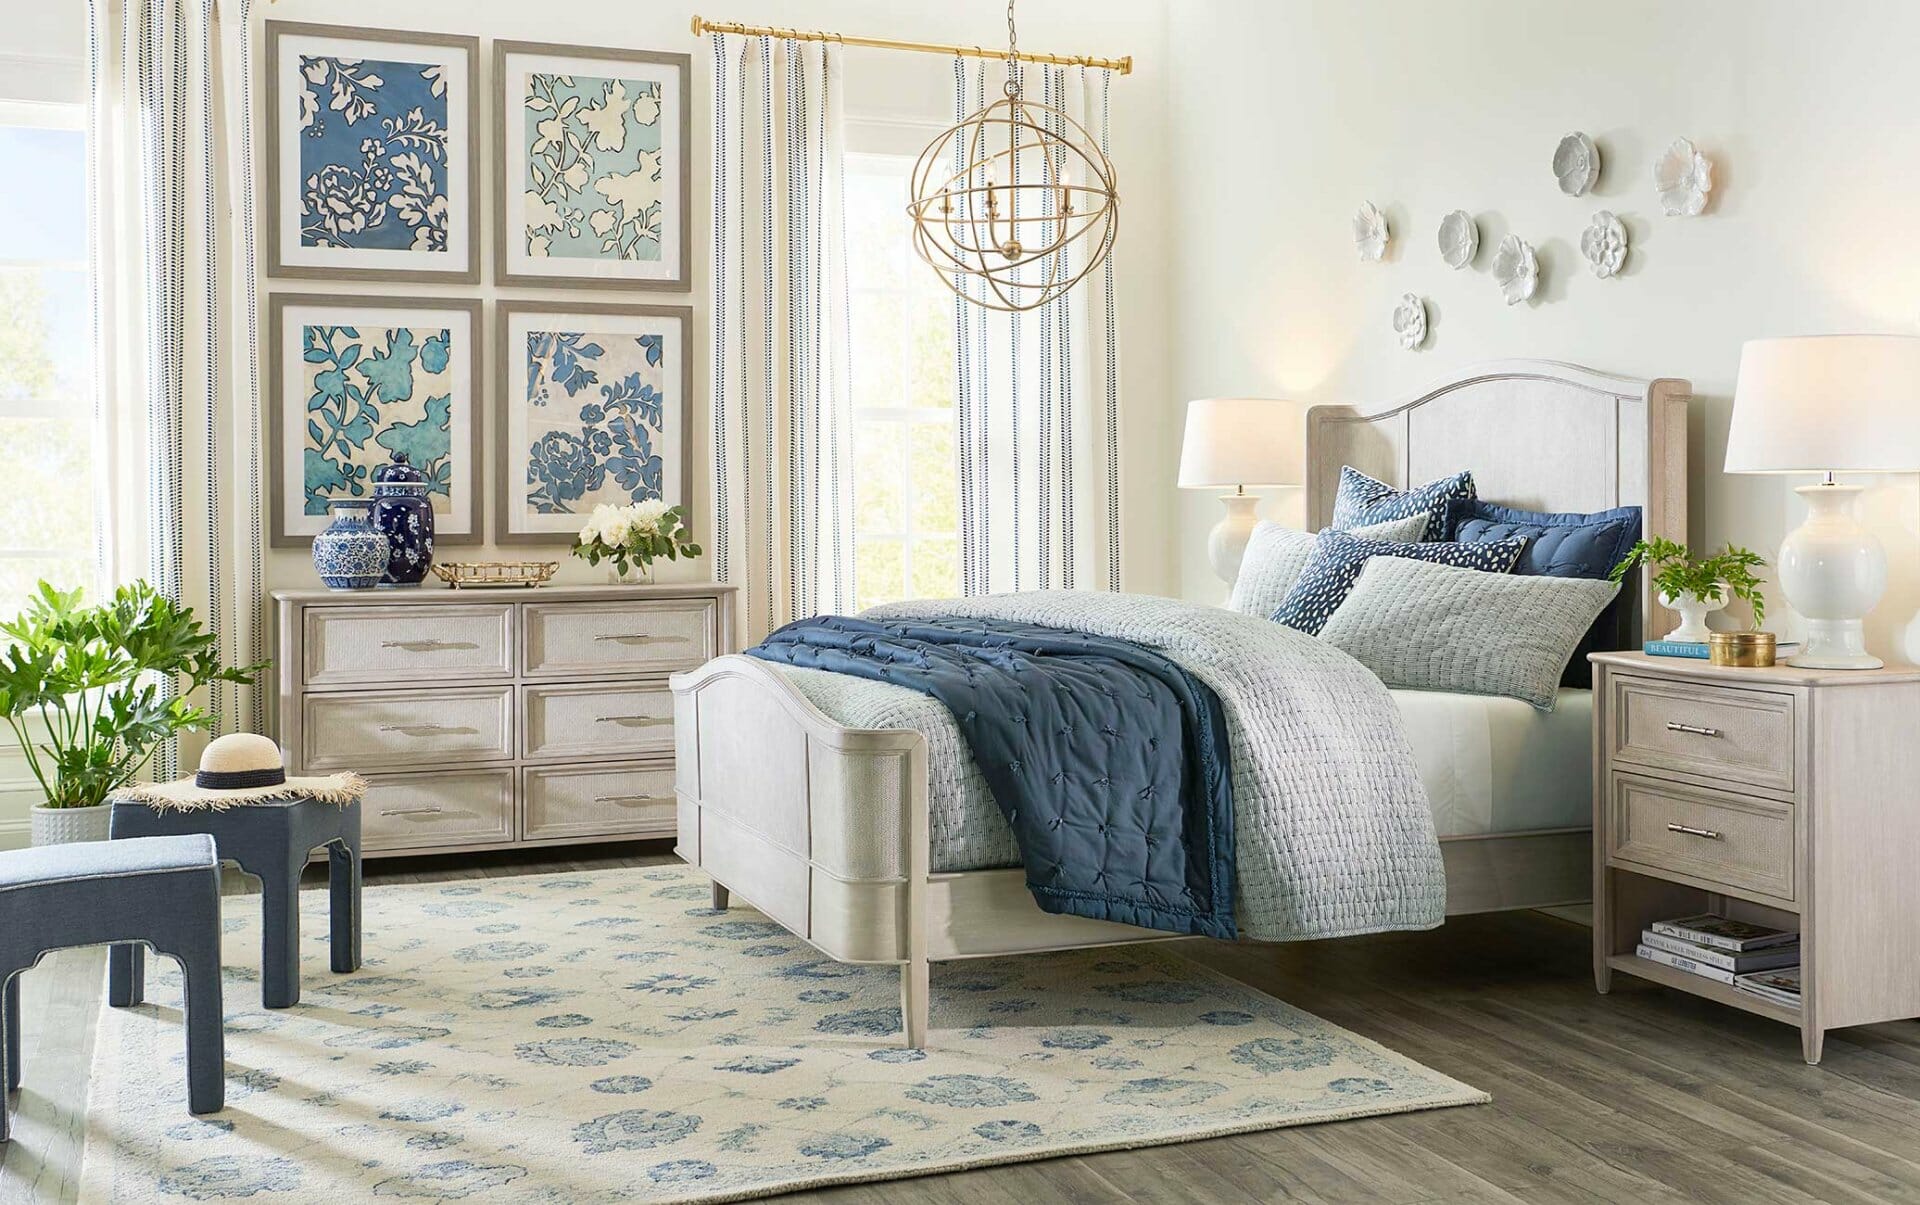 ballard bedroom furniture inspiration